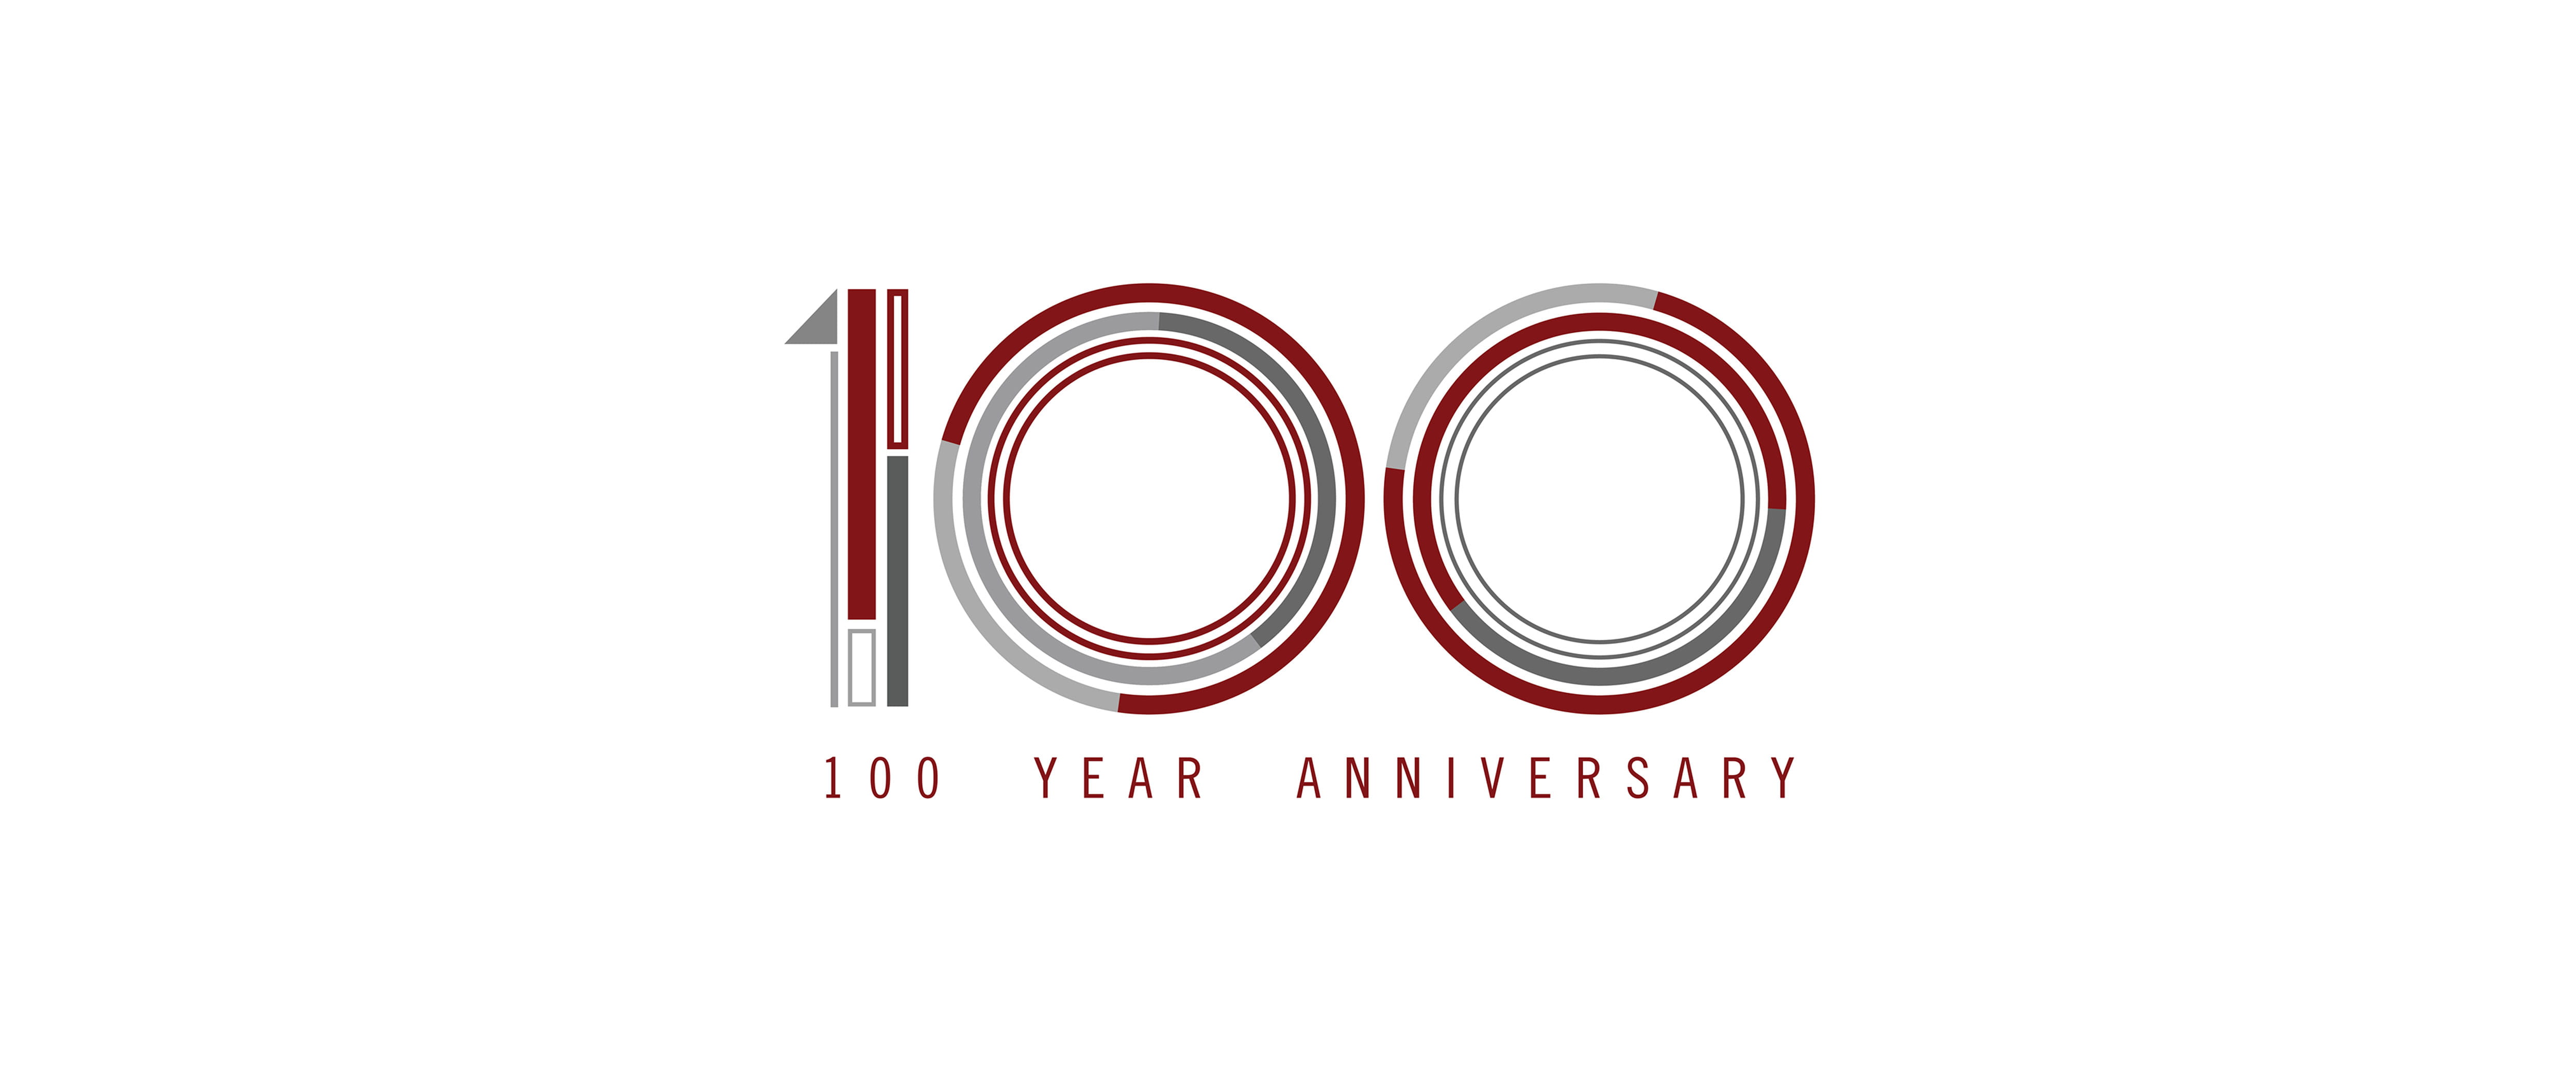 Lazio 100 Years Logo PNG Transparent & SVG Vector - Freebie Supply